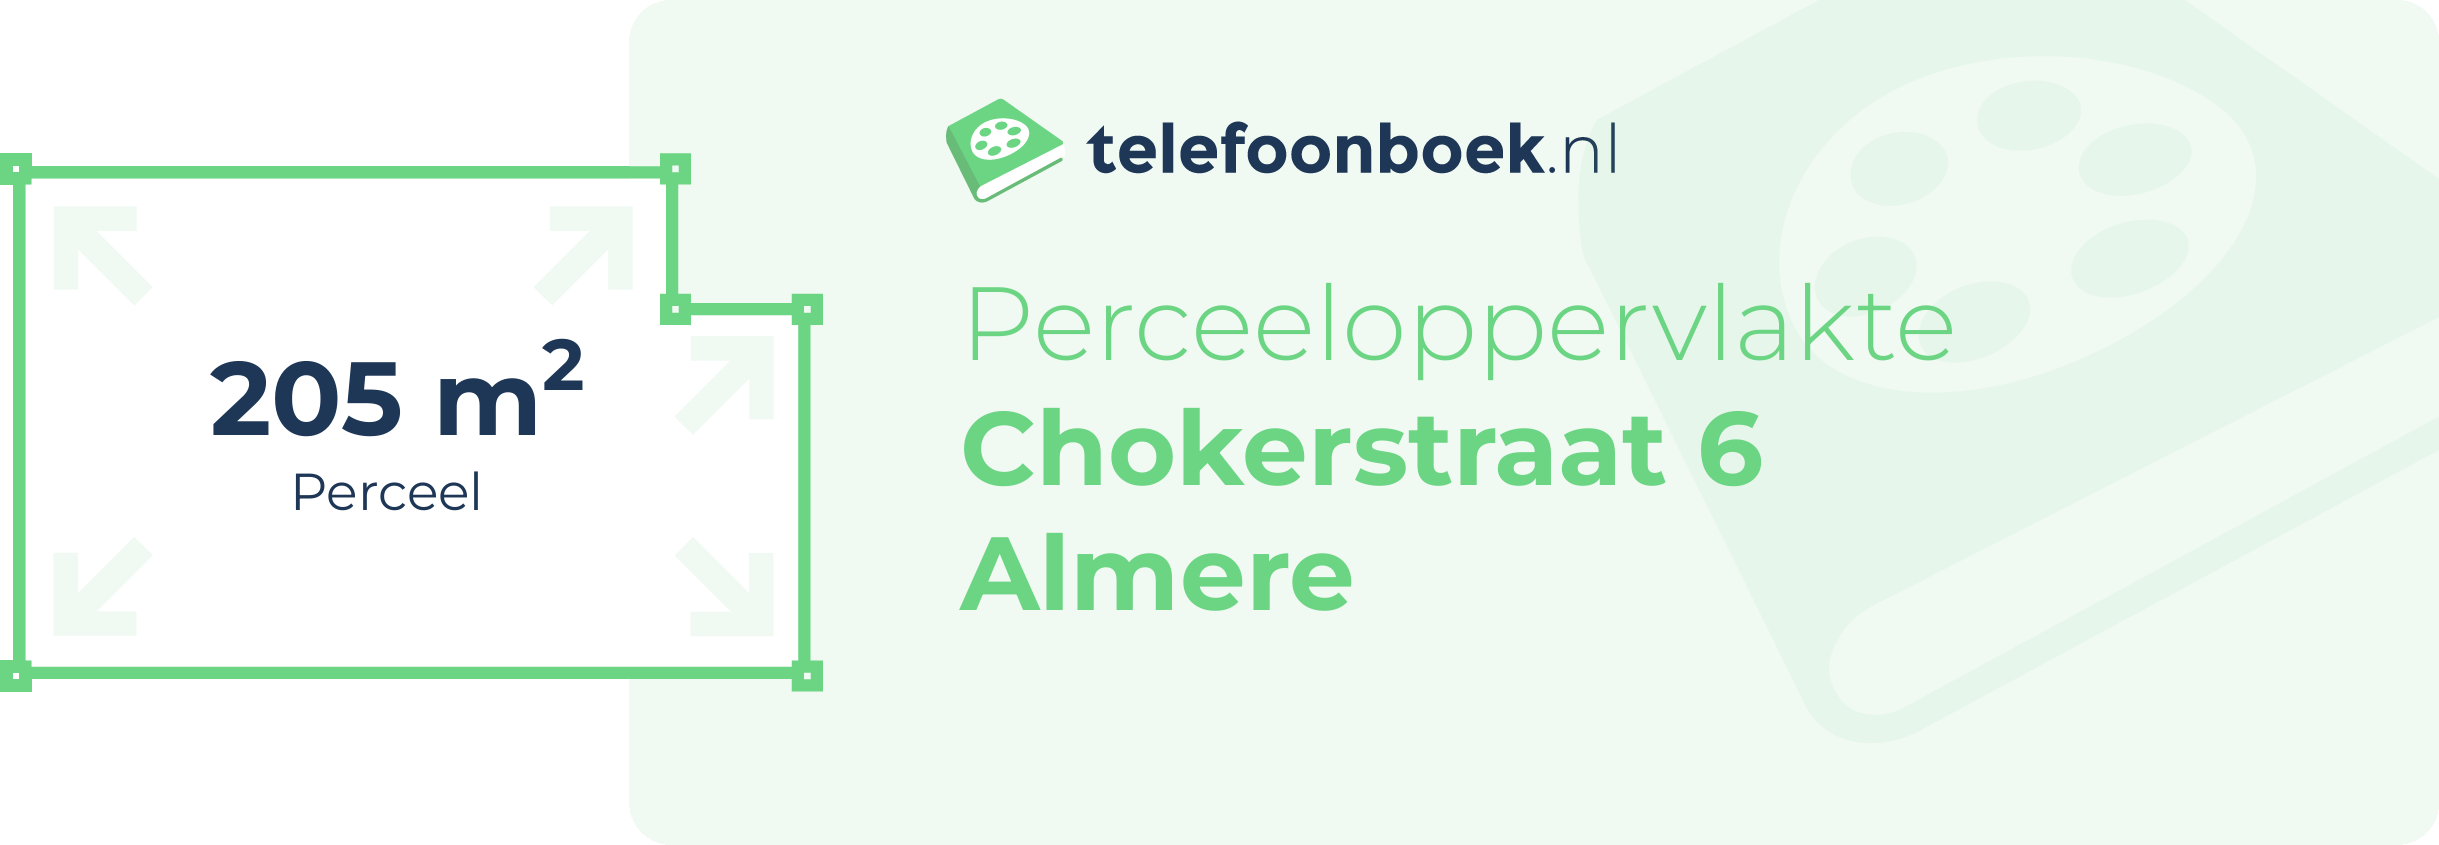 Perceeloppervlakte Chokerstraat 6 Almere